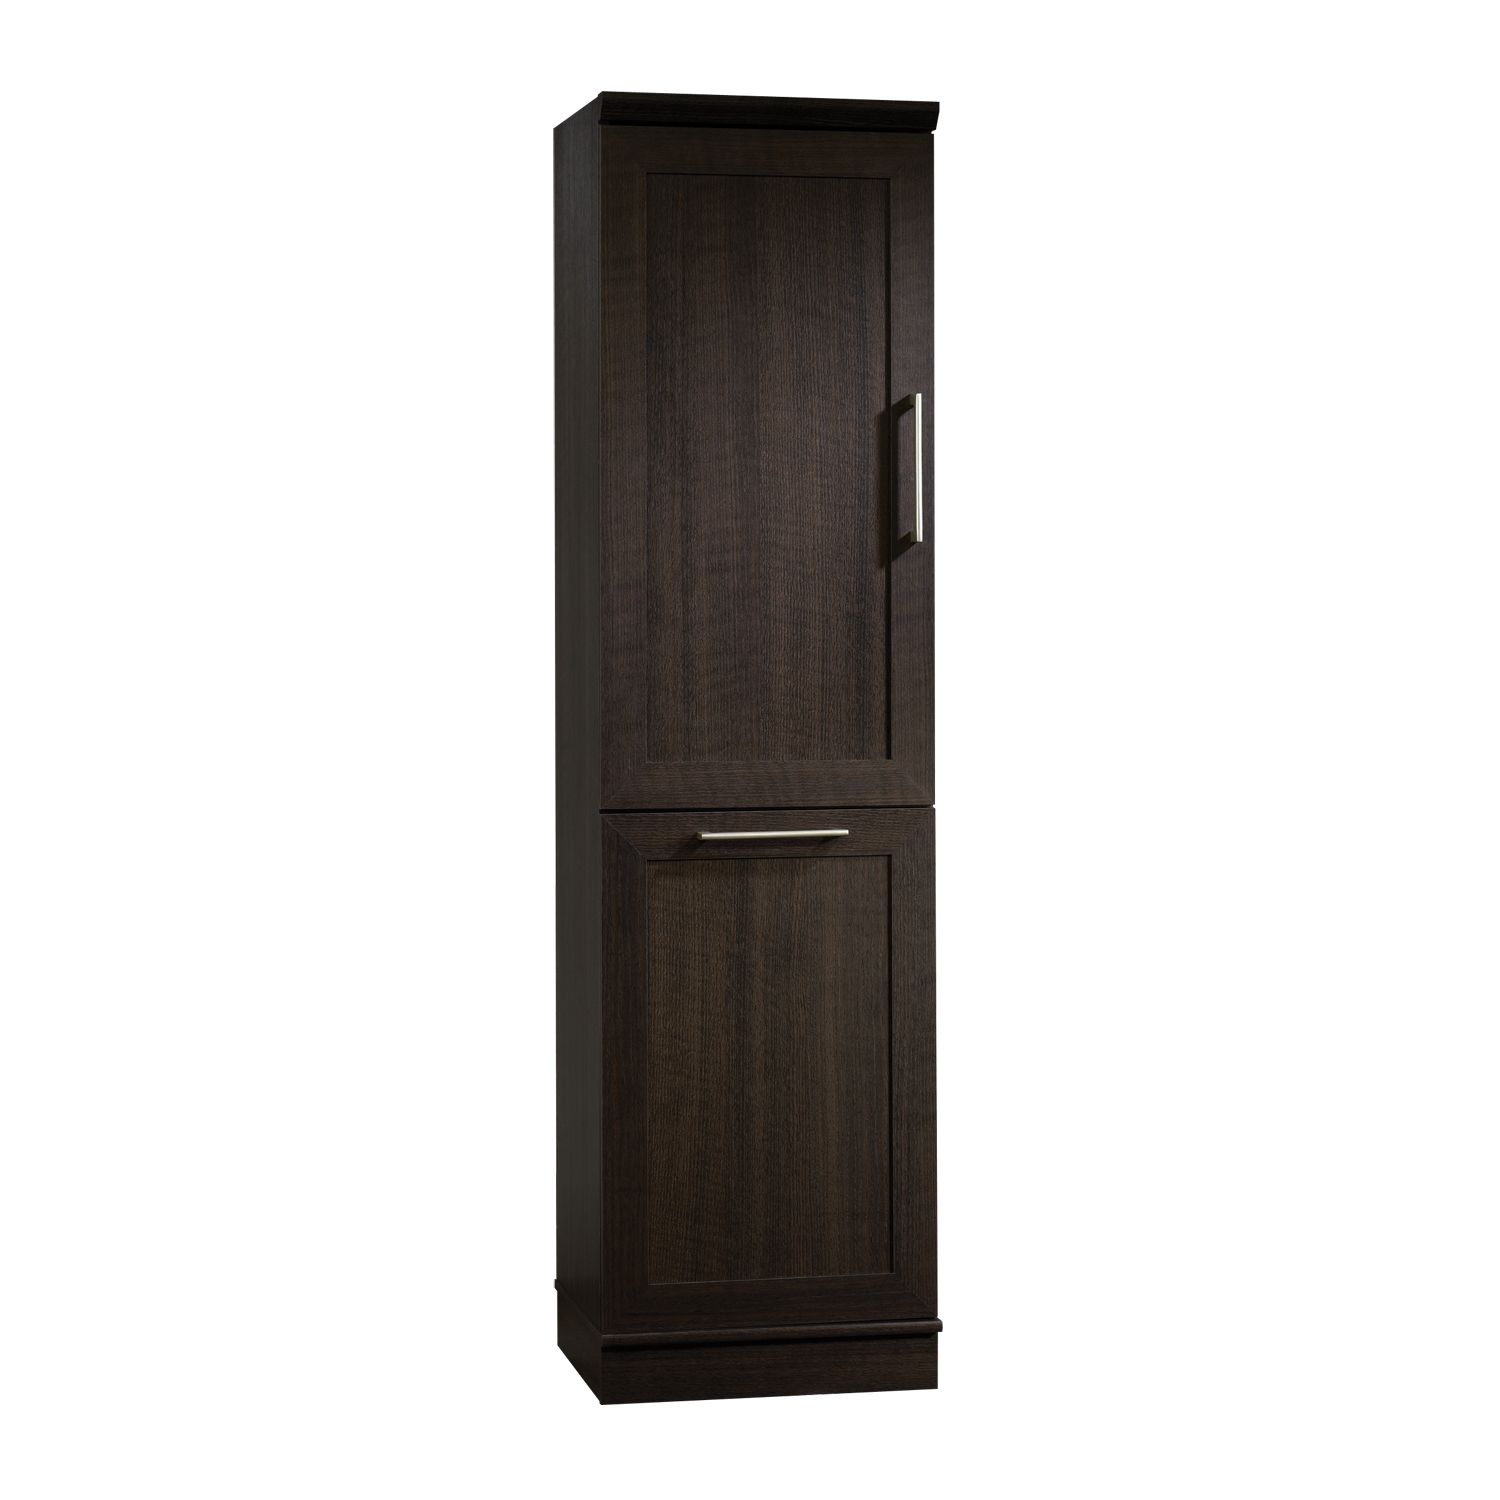 UPC 042666108782 product image for Sauder Home Plus Storage Cabinet | upcitemdb.com